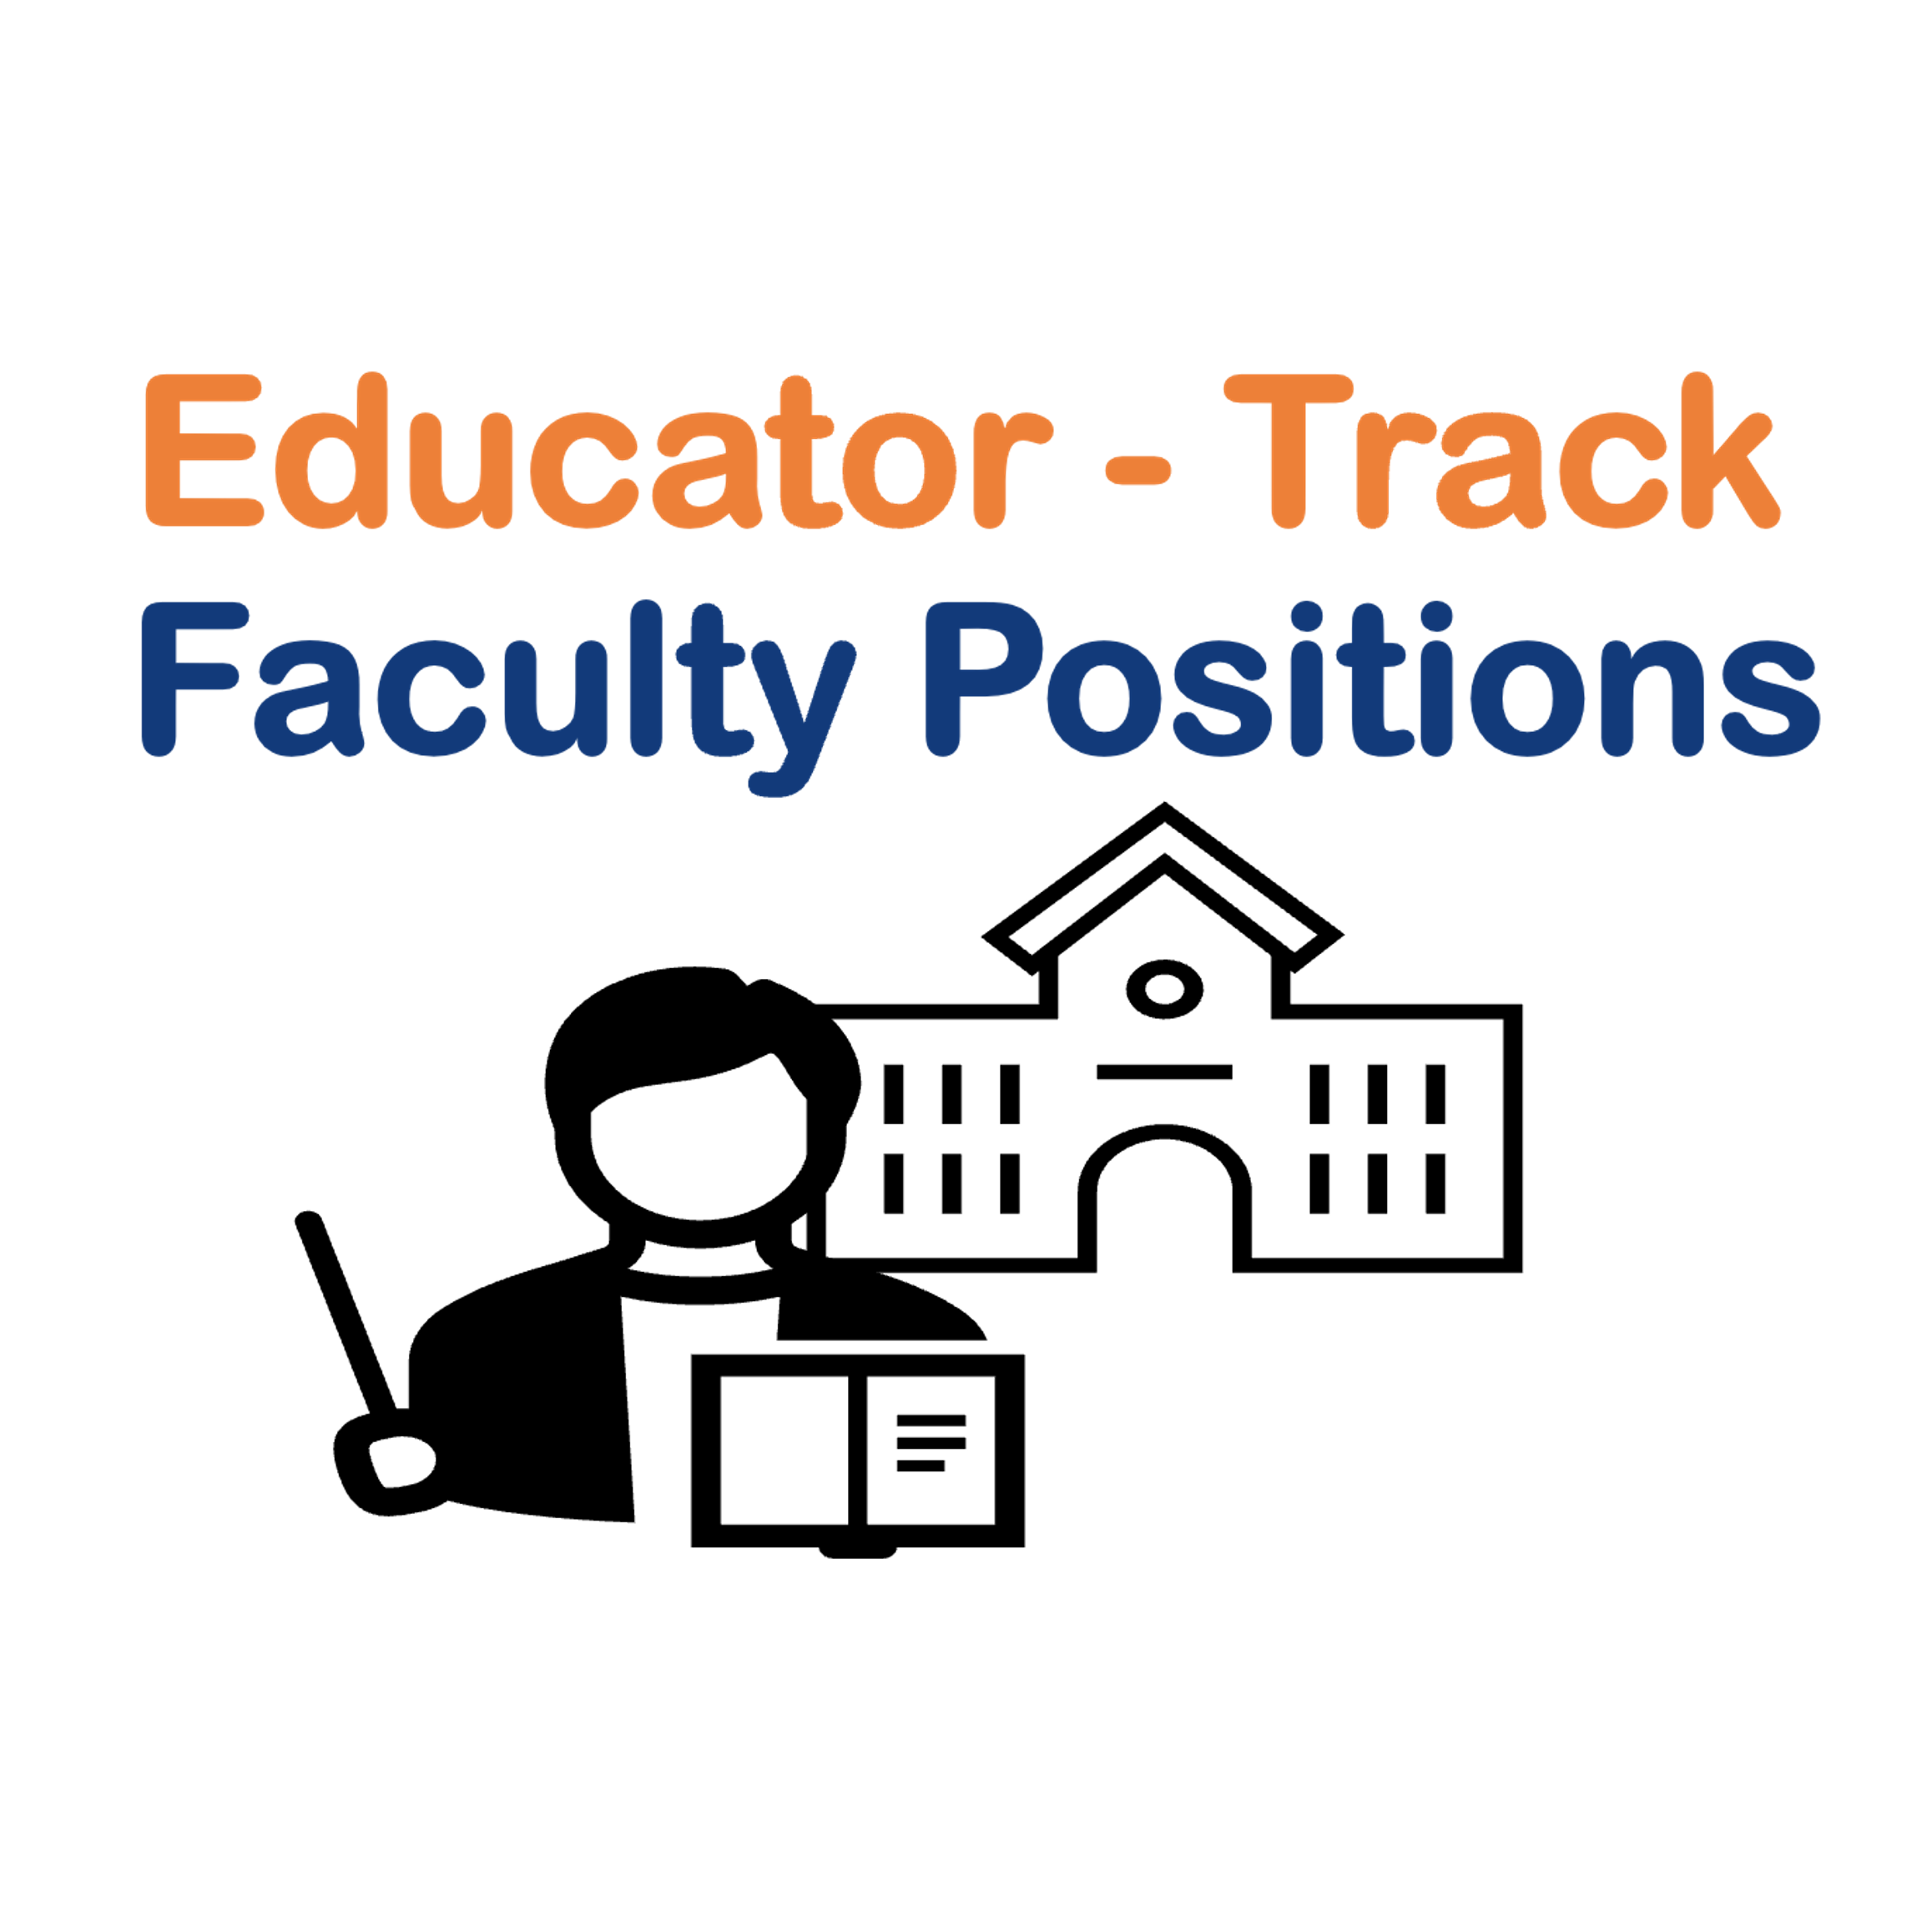 Educator-Track